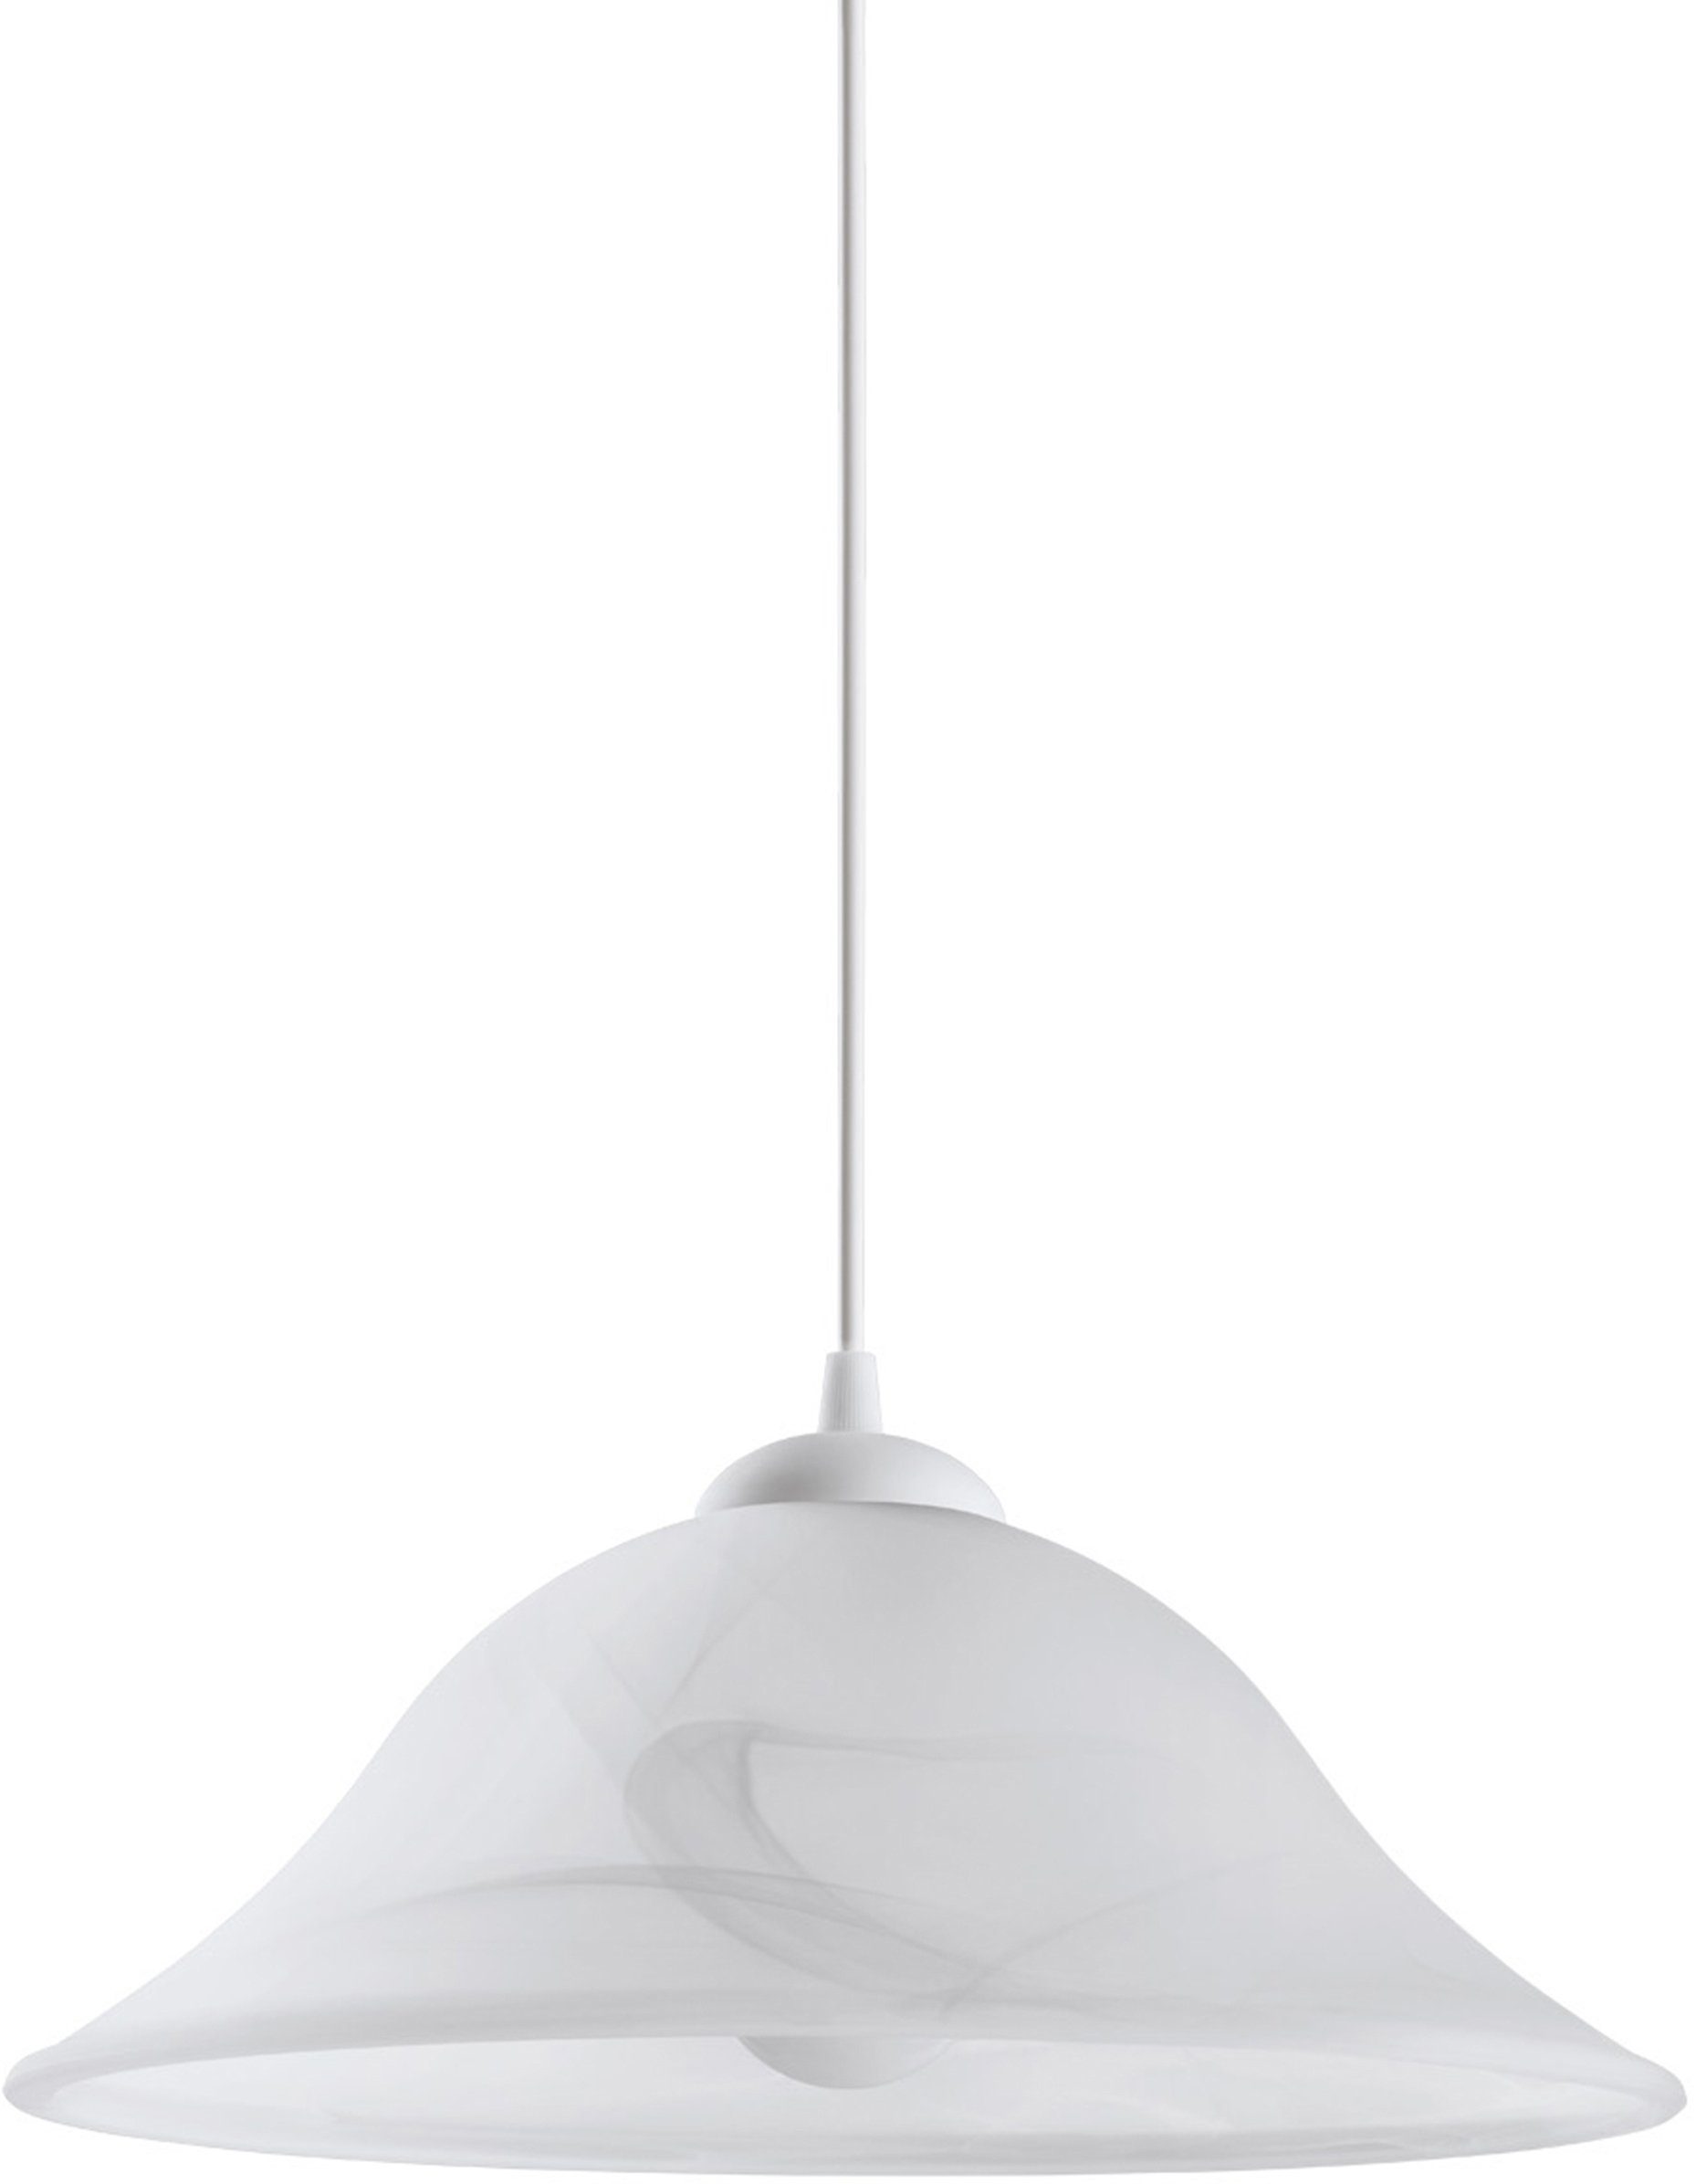 EGLO Hanglamp Albany wit / ø35 x h110 cm / exk. 1x e27 (elk max. 60 w) / hanglamp - eettafellamp - eettafellamp - hanglamp - eetkamerlamp - lamp voor eettafel - lamp voor de woonka